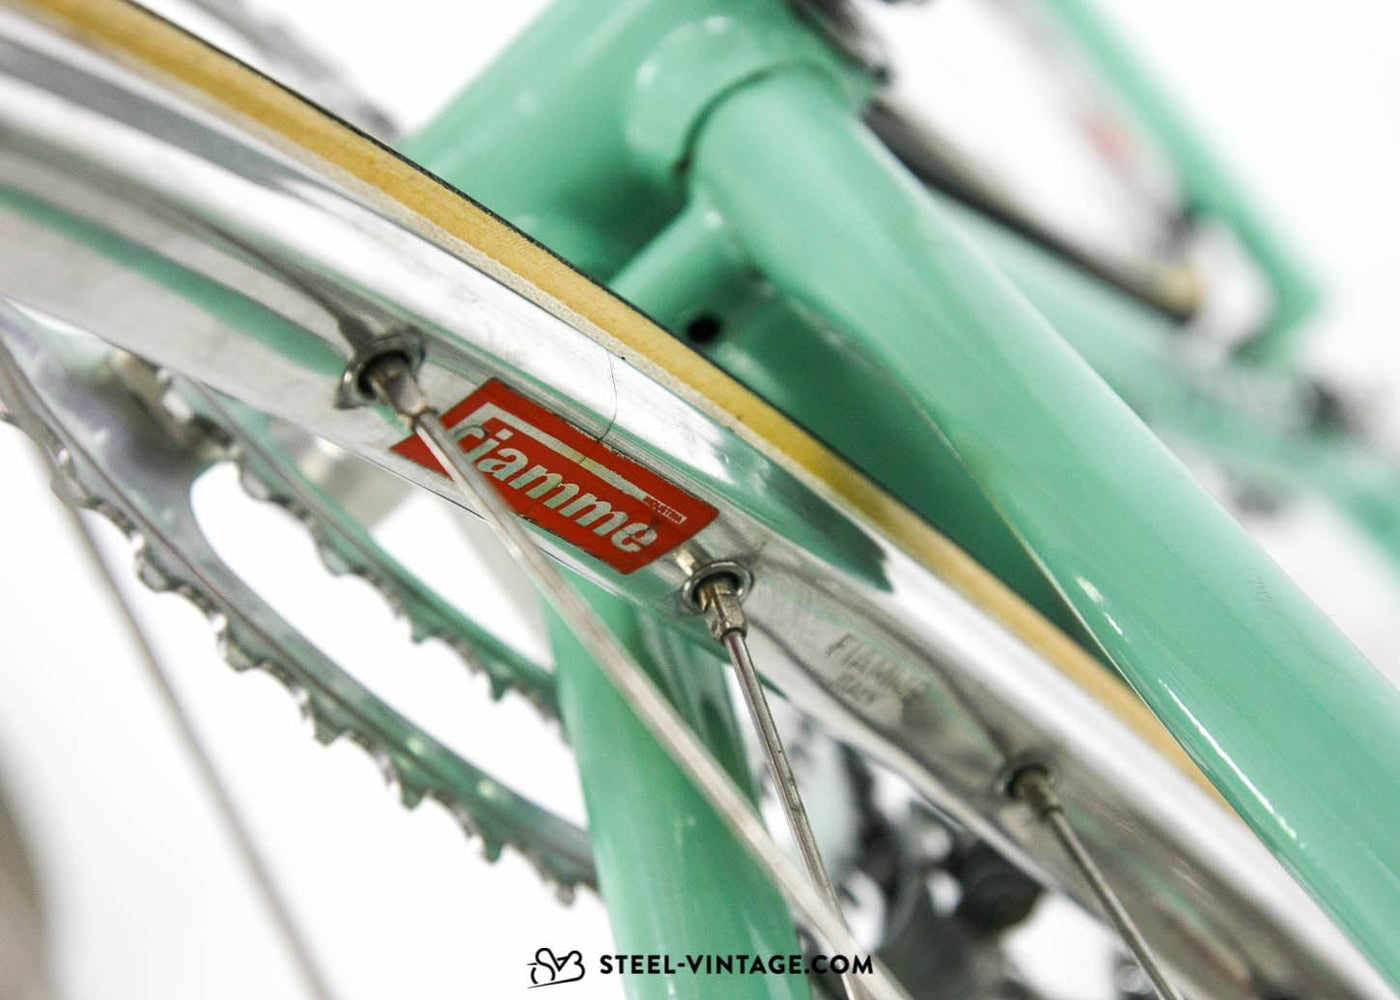 Bianchi Rekord Eroica Classic Bike 1970s - Steel Vintage Bikes